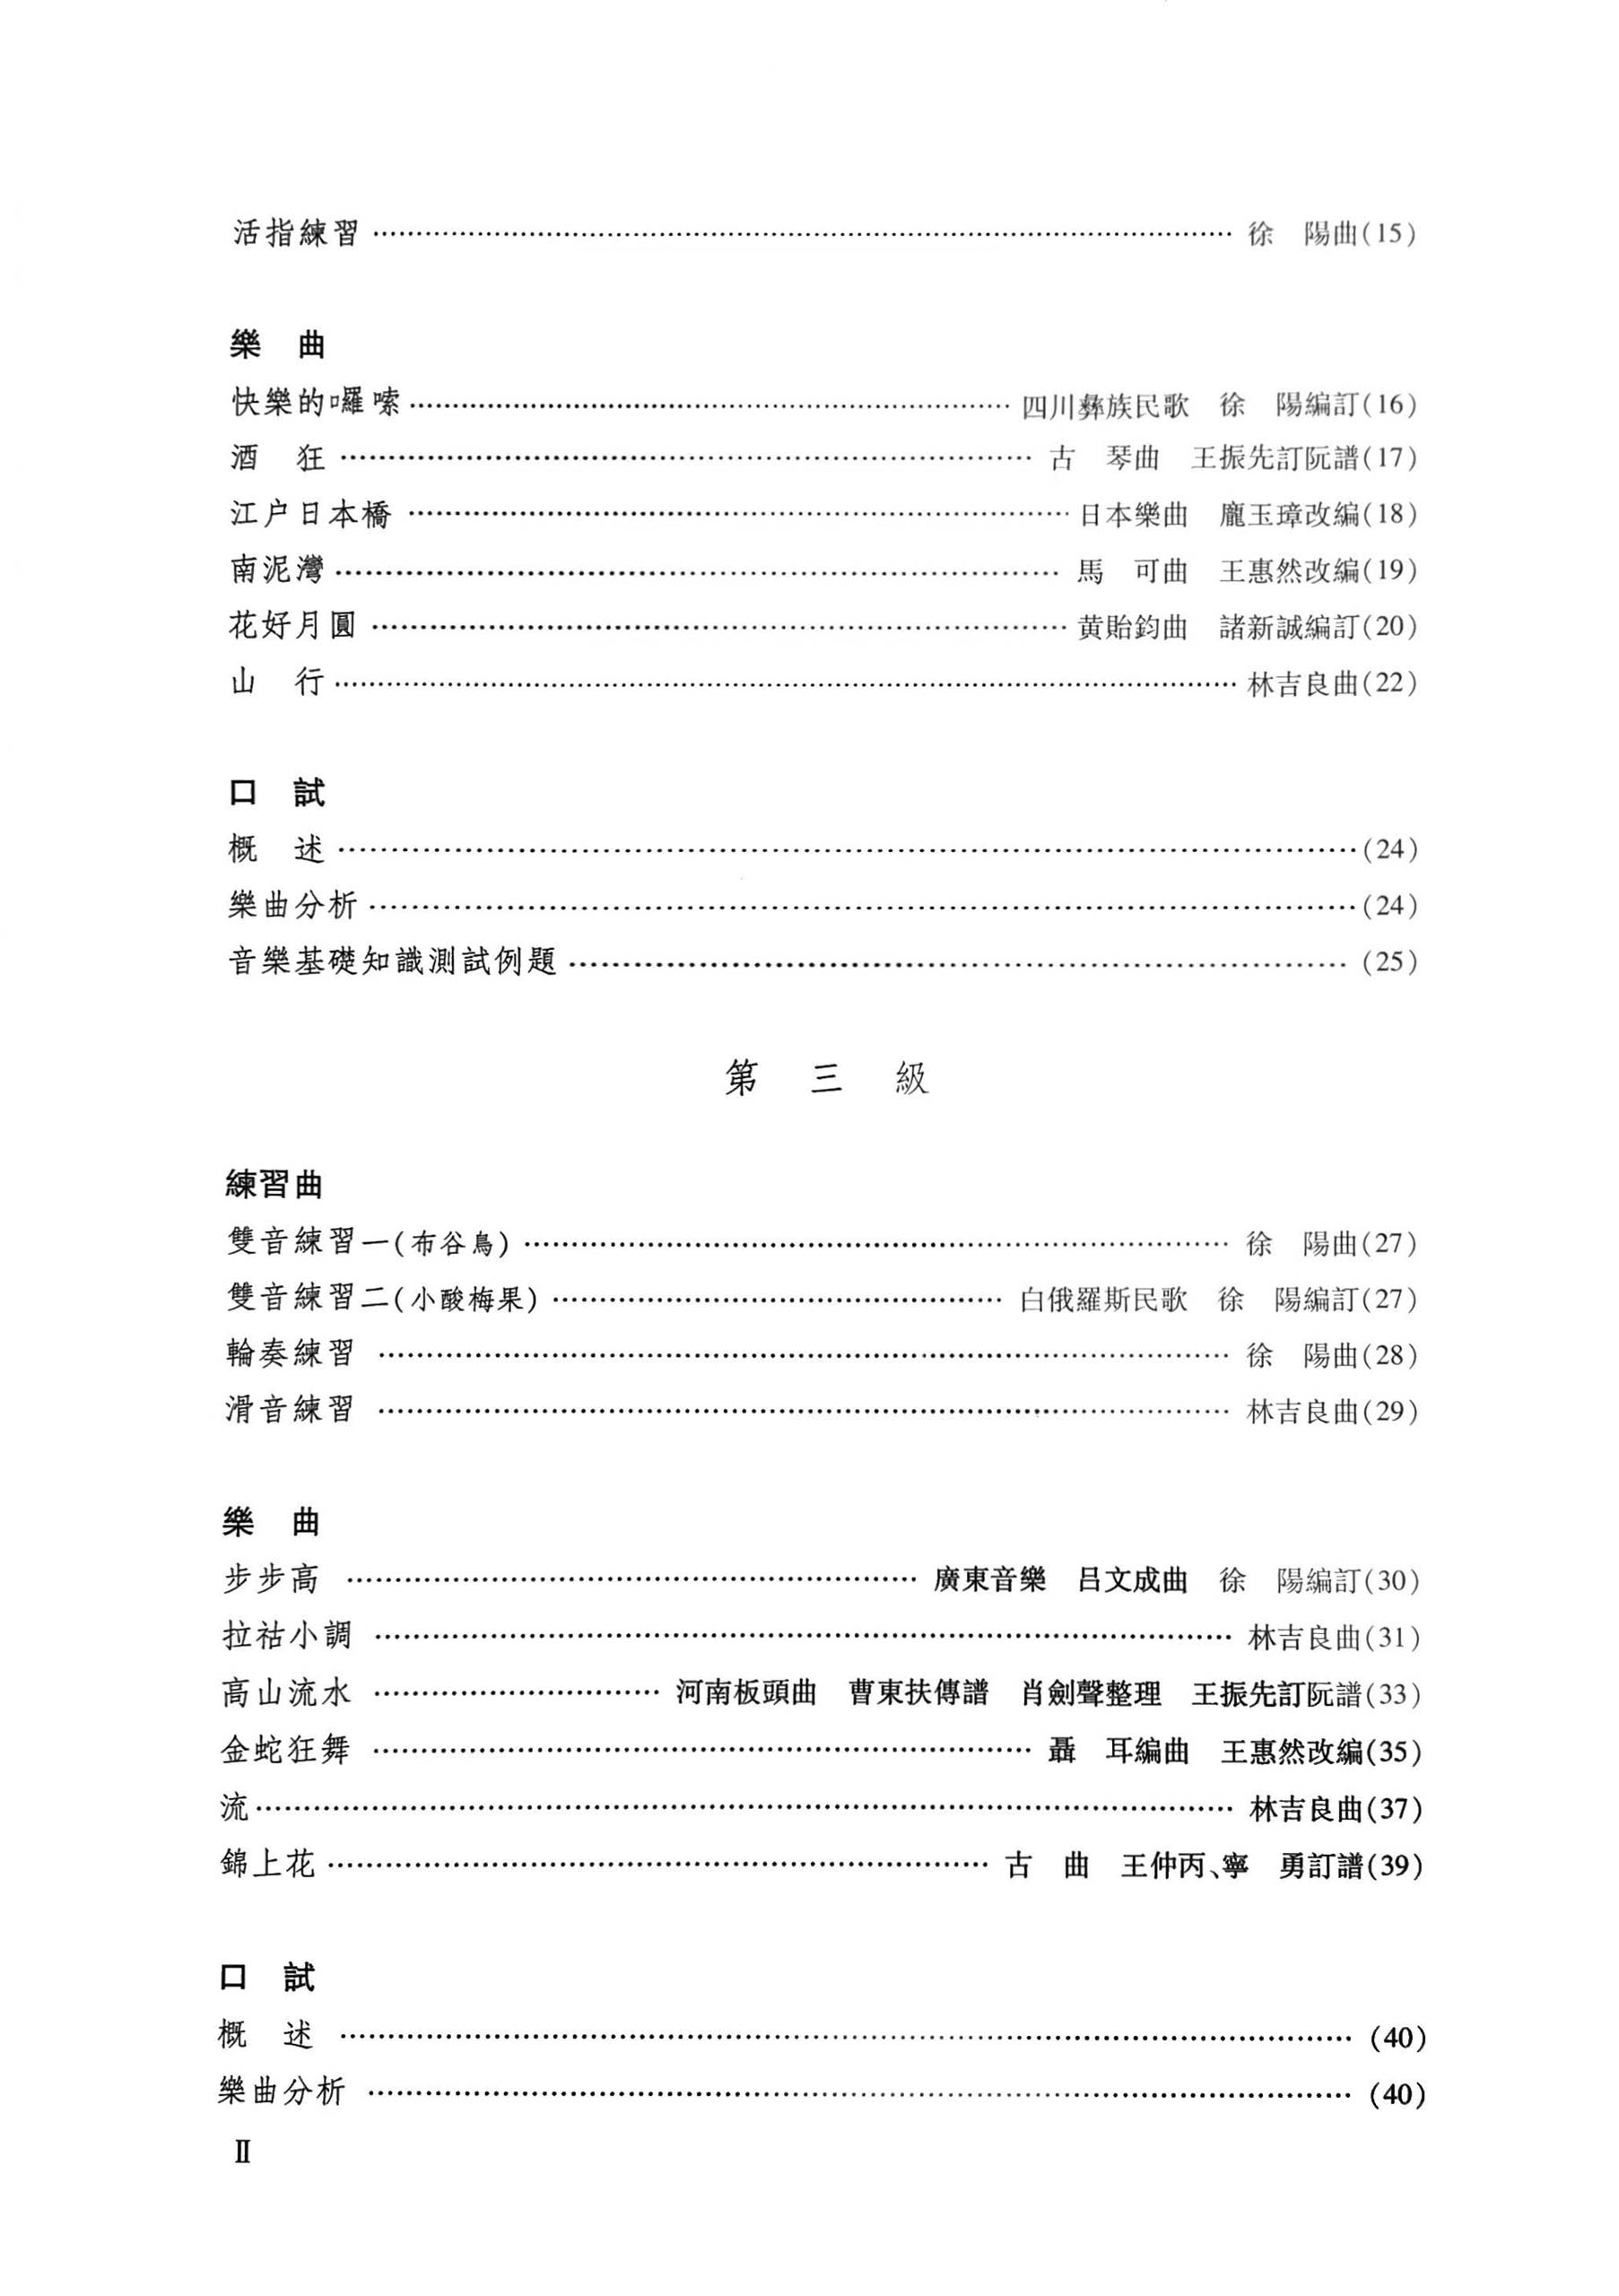 Zhongruan Grading Examination Book by CCOM – NAFA (Beginner Grade 1-6) Content Page 2